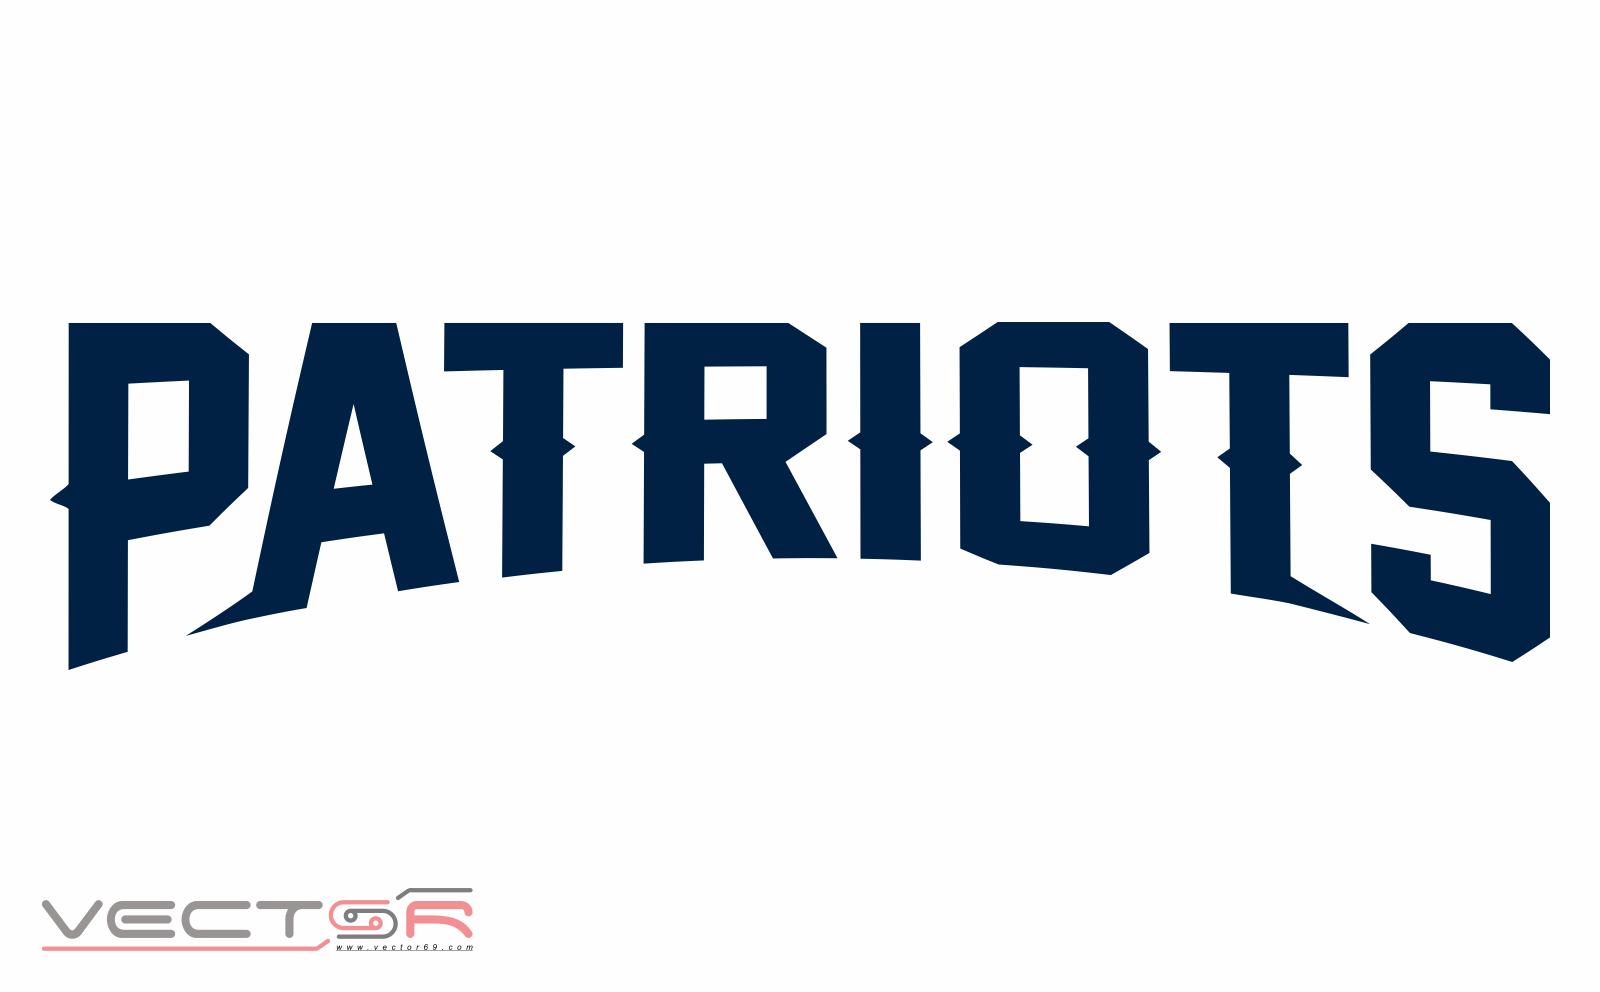 New England Patriots Wordmark - Download Transparent Images, Portable Network Graphics (.PNG)